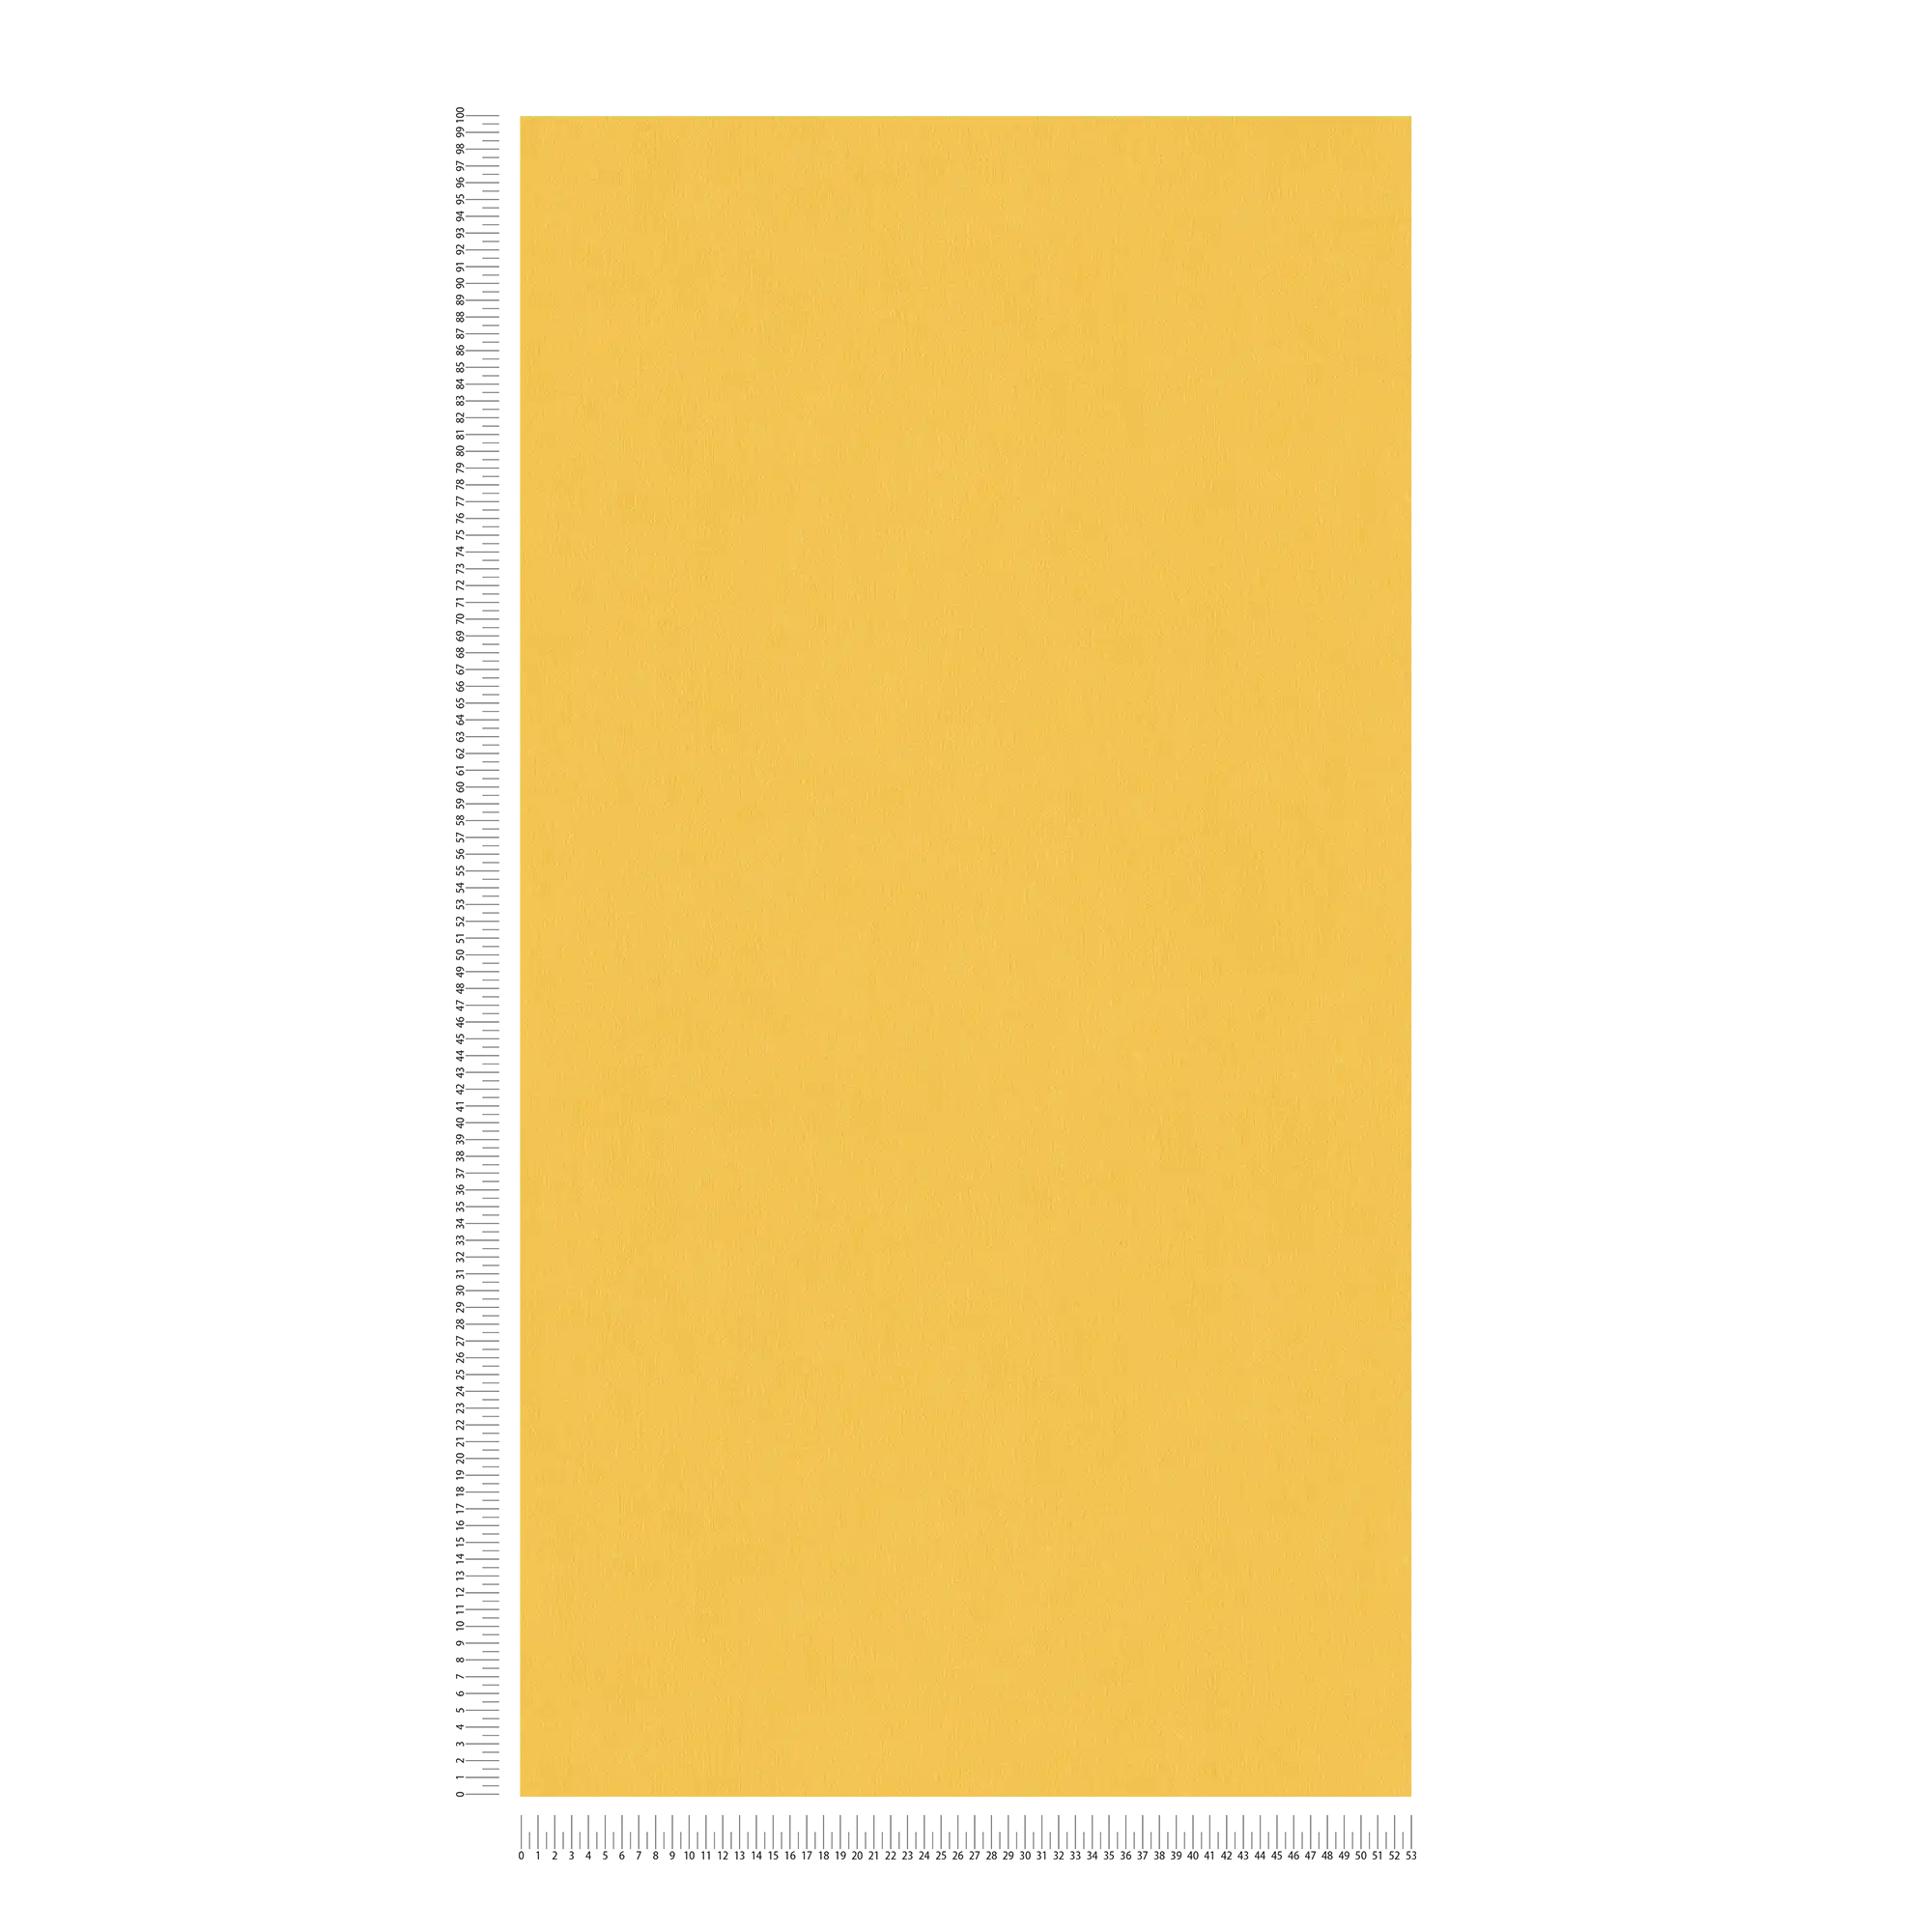             Carta da parati giallo senape a tinta unita per camerette - Giallo
        